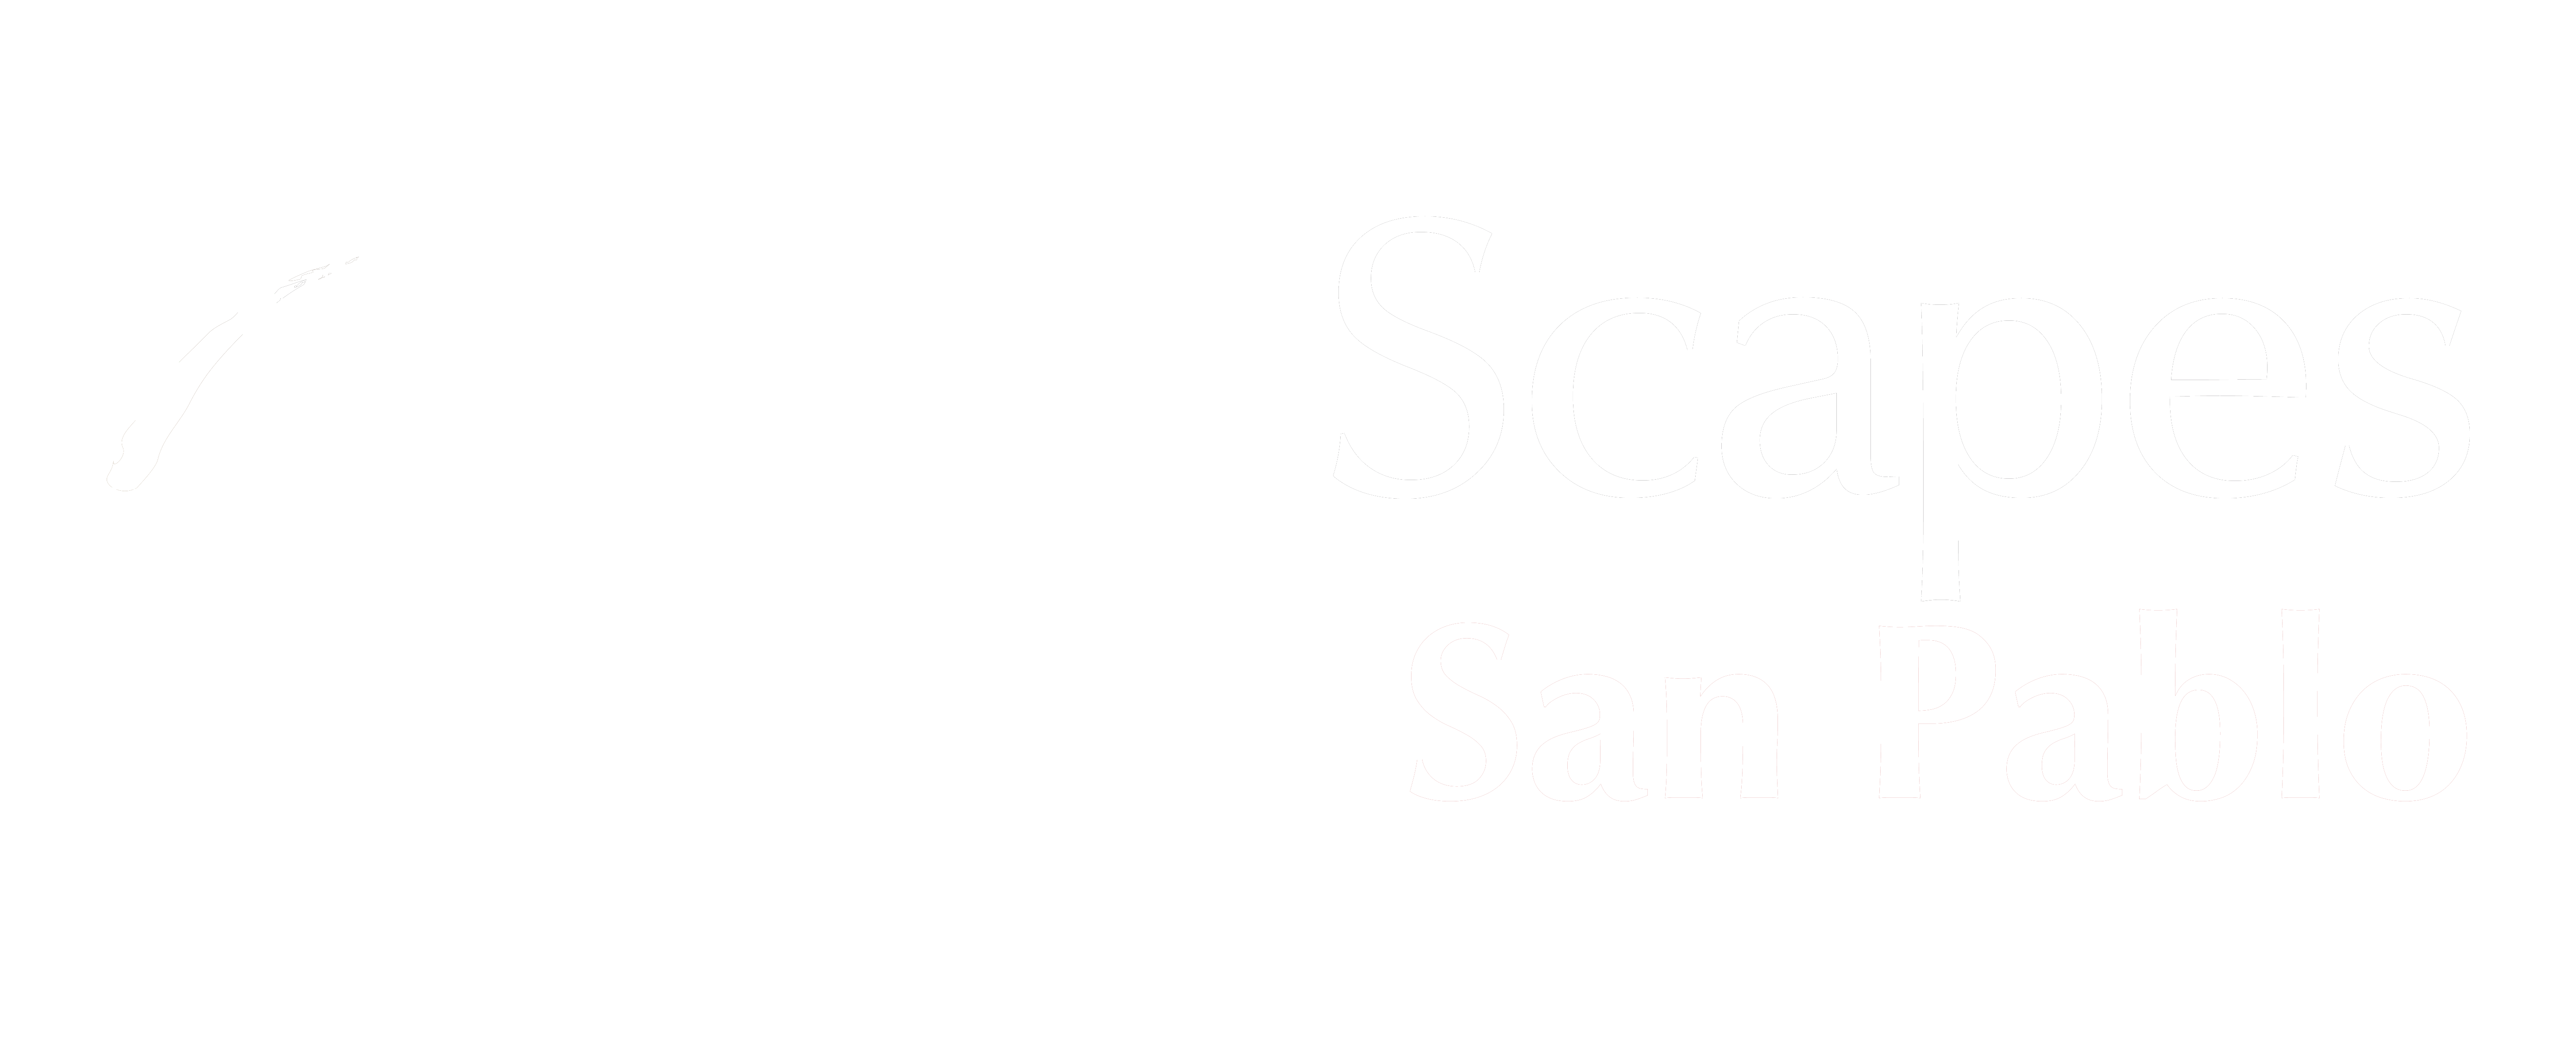 name logo